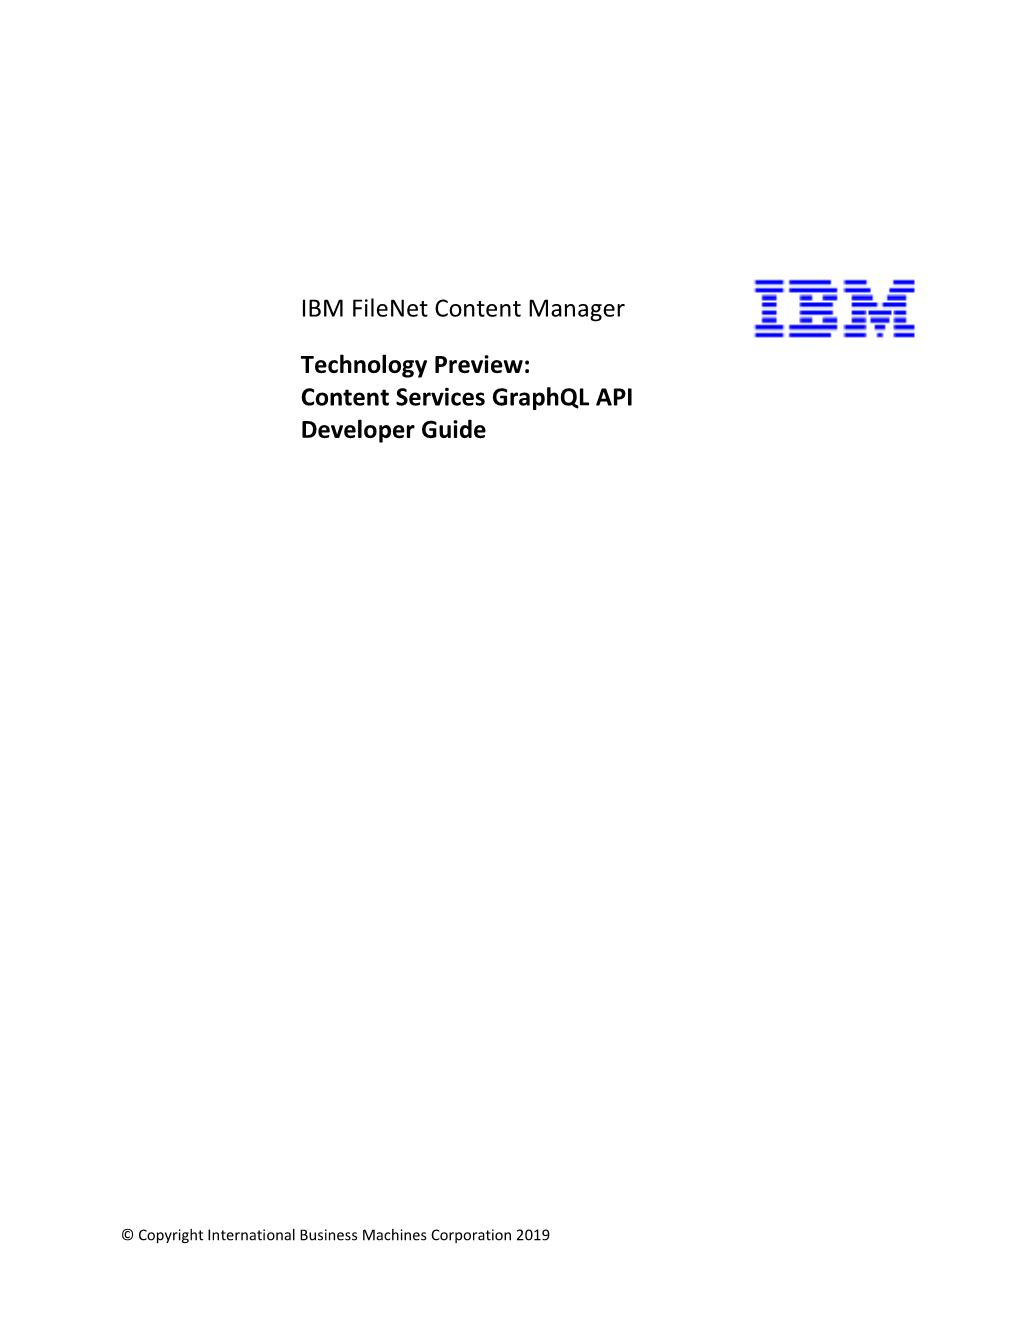 IBM Filenet Content Manager Technology Preview: Content Services Graphql API Developer Guide